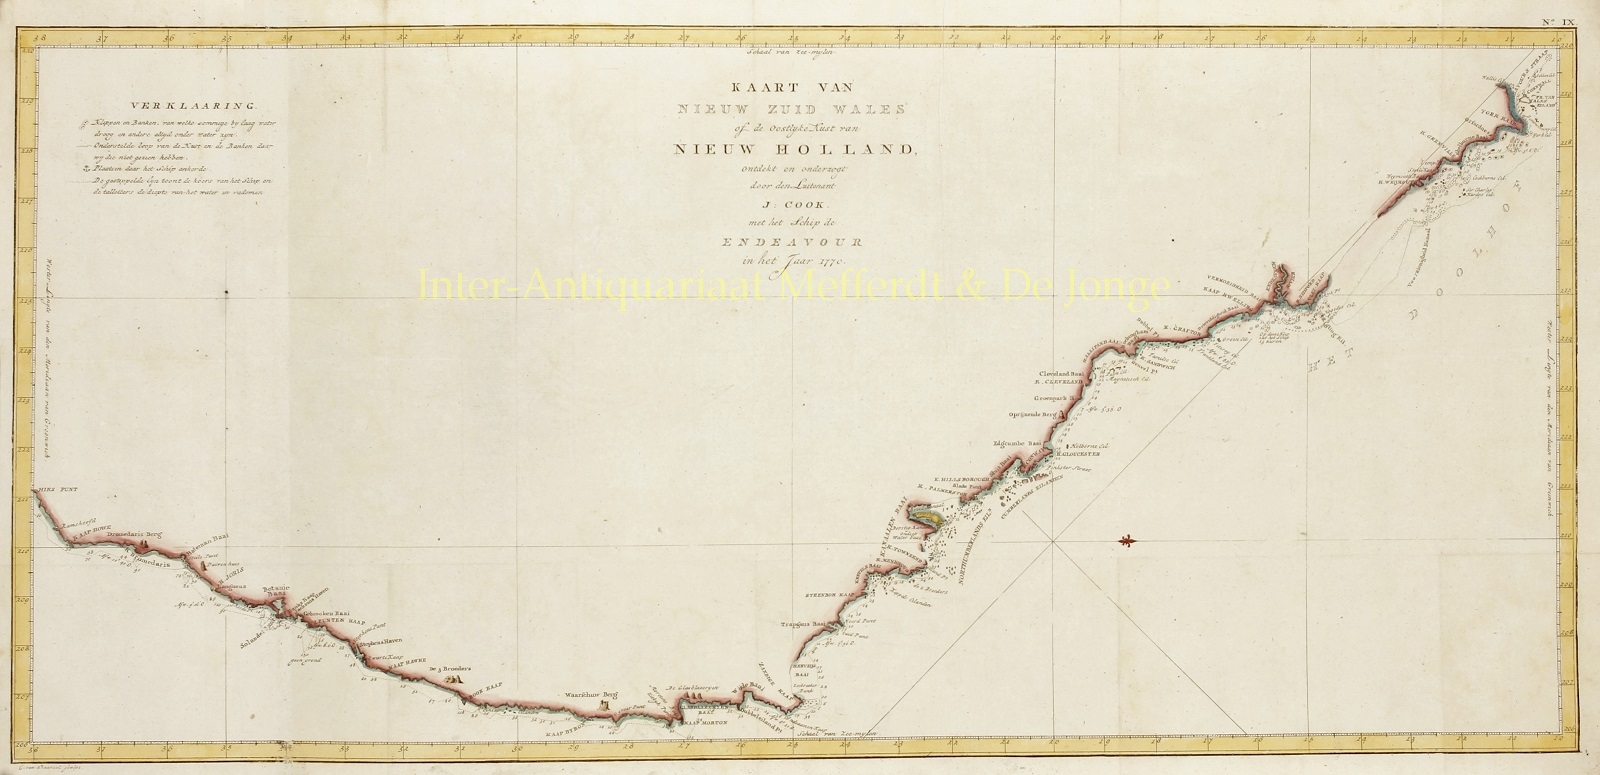 Baarsel-- W.C. van - Australia, New South Wales - after James Cook, c. 1797